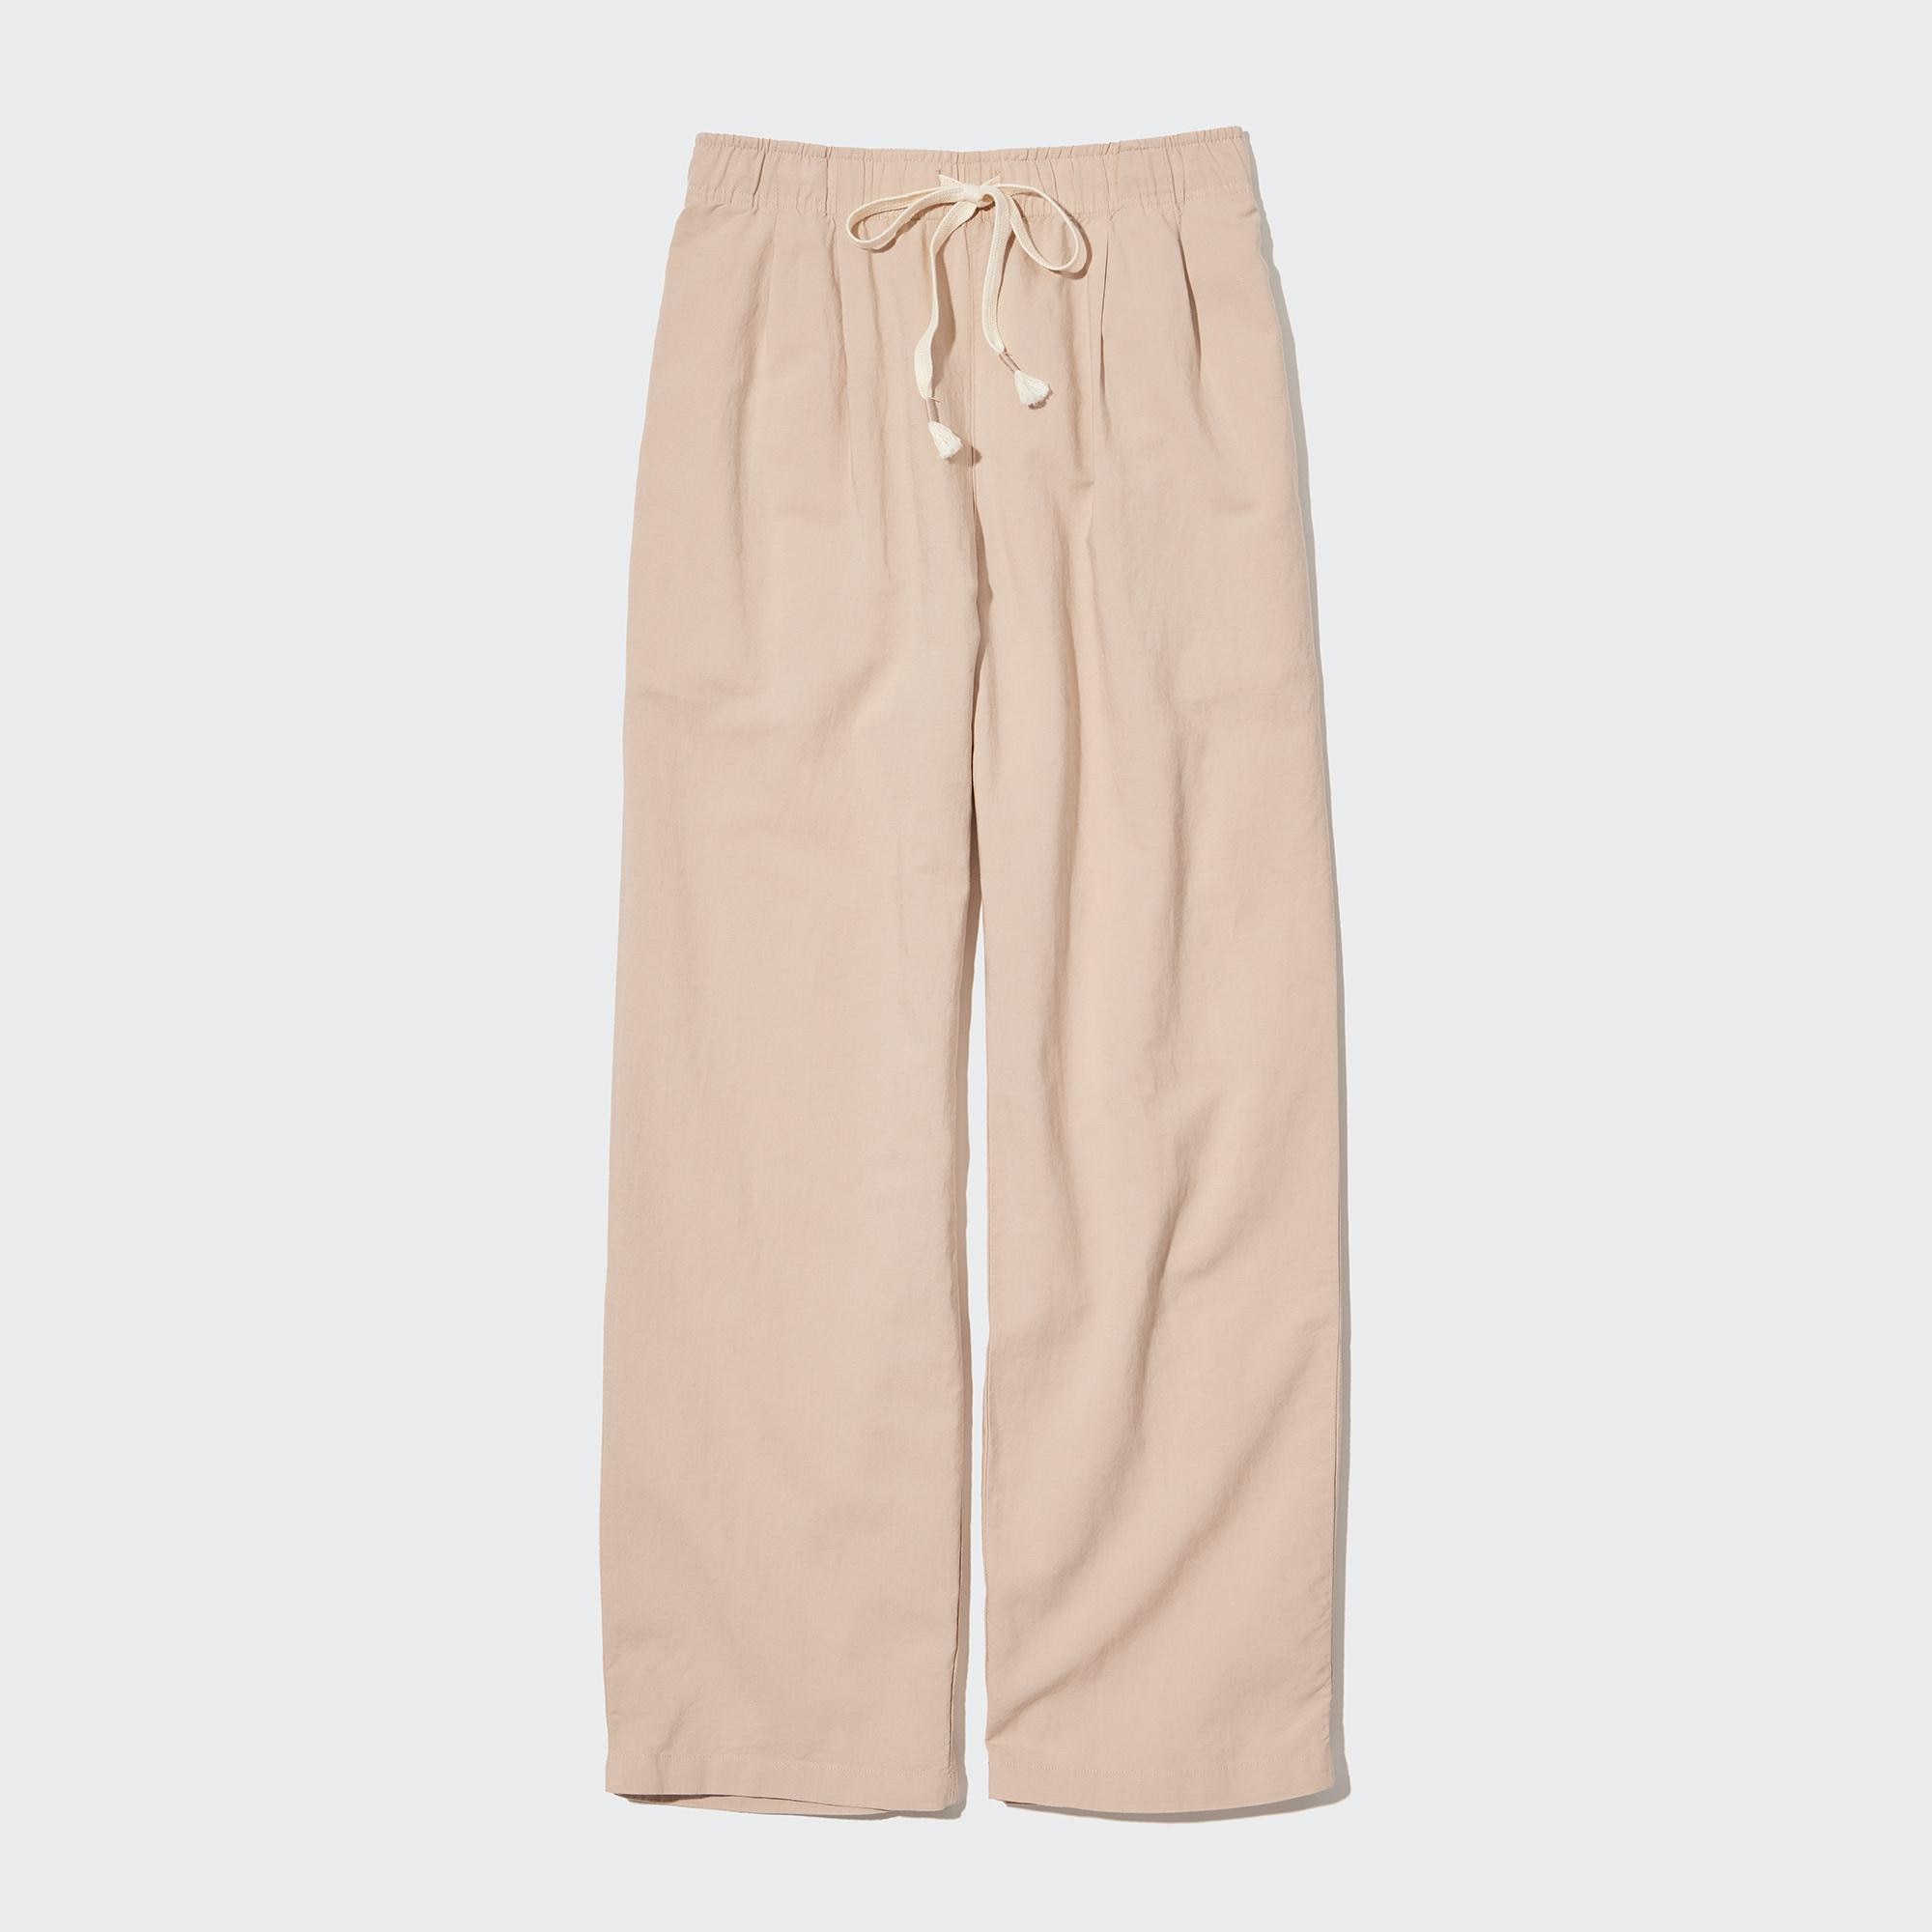 Rapbin Women's Cotton Linen Pants Drawstring Elastic Waist Side Pockets  high Rise Casual Loose Trousers Pants at Amazon Women's Clothing store